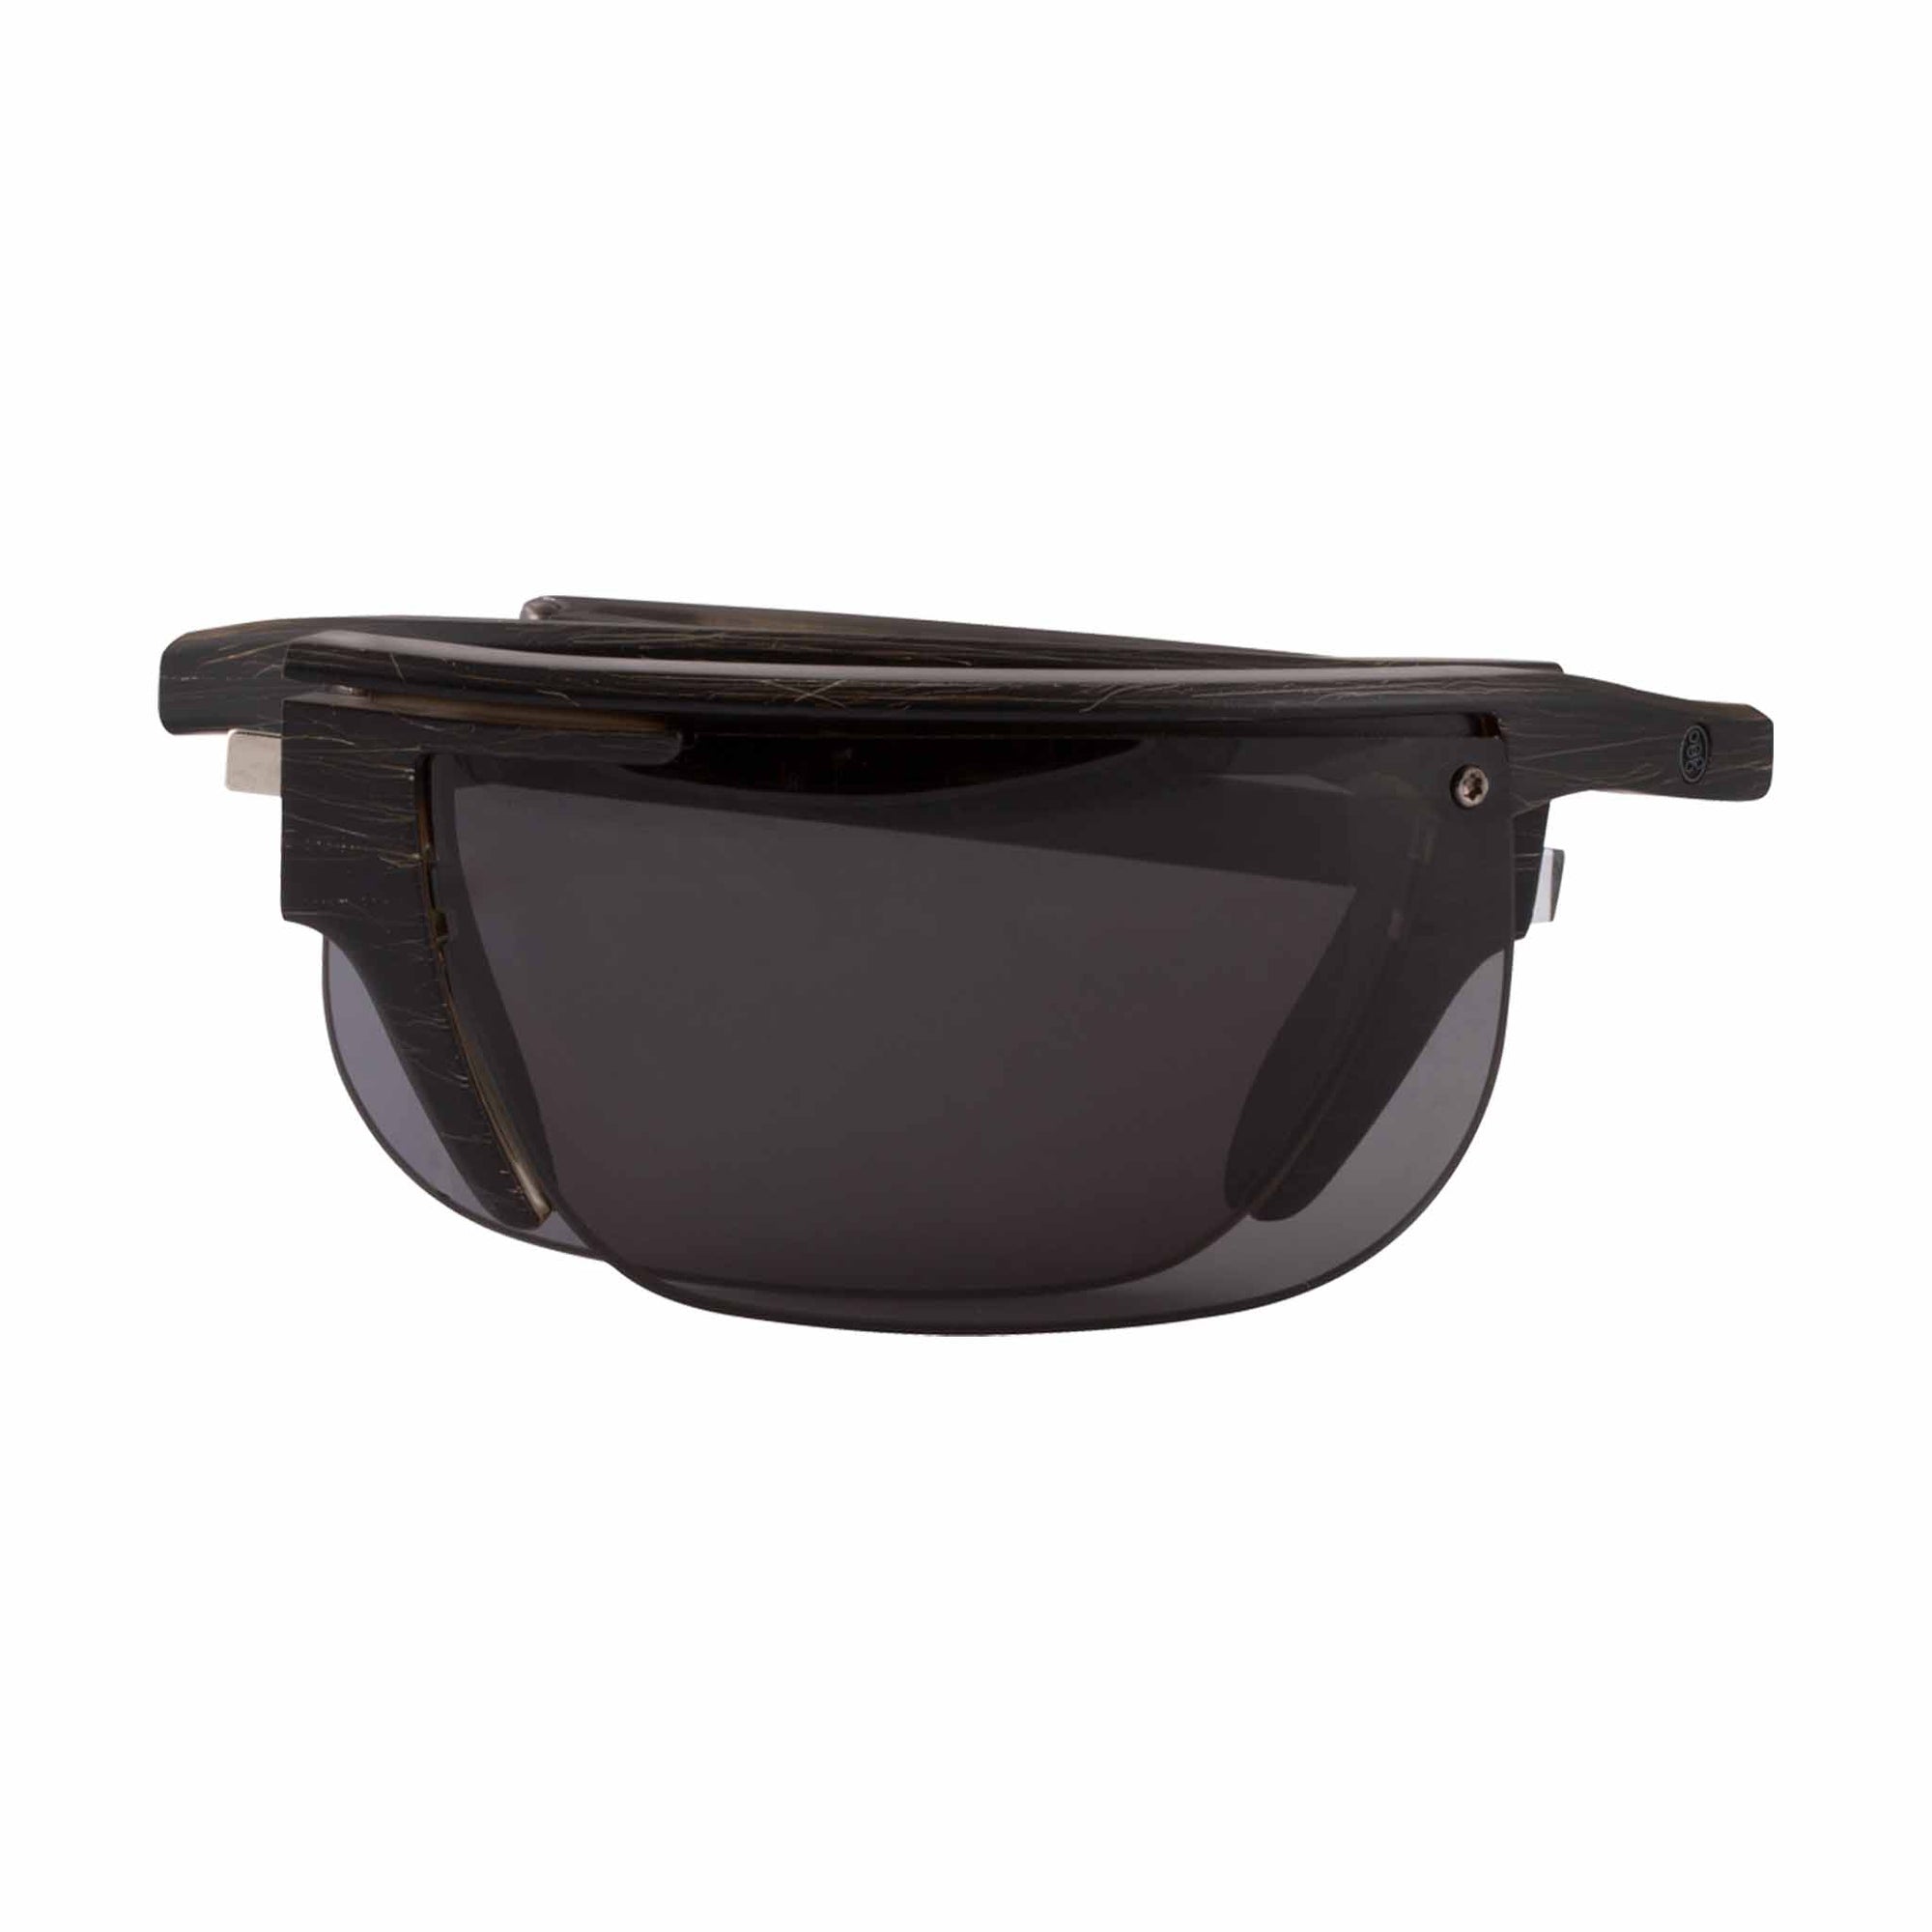 Popticals, Premium Compact Sunglasses, PopArt, 090030-ZUGP, Polarized Sunglasses, Matte Brush Black Frame, Gray Lenses, Compact View